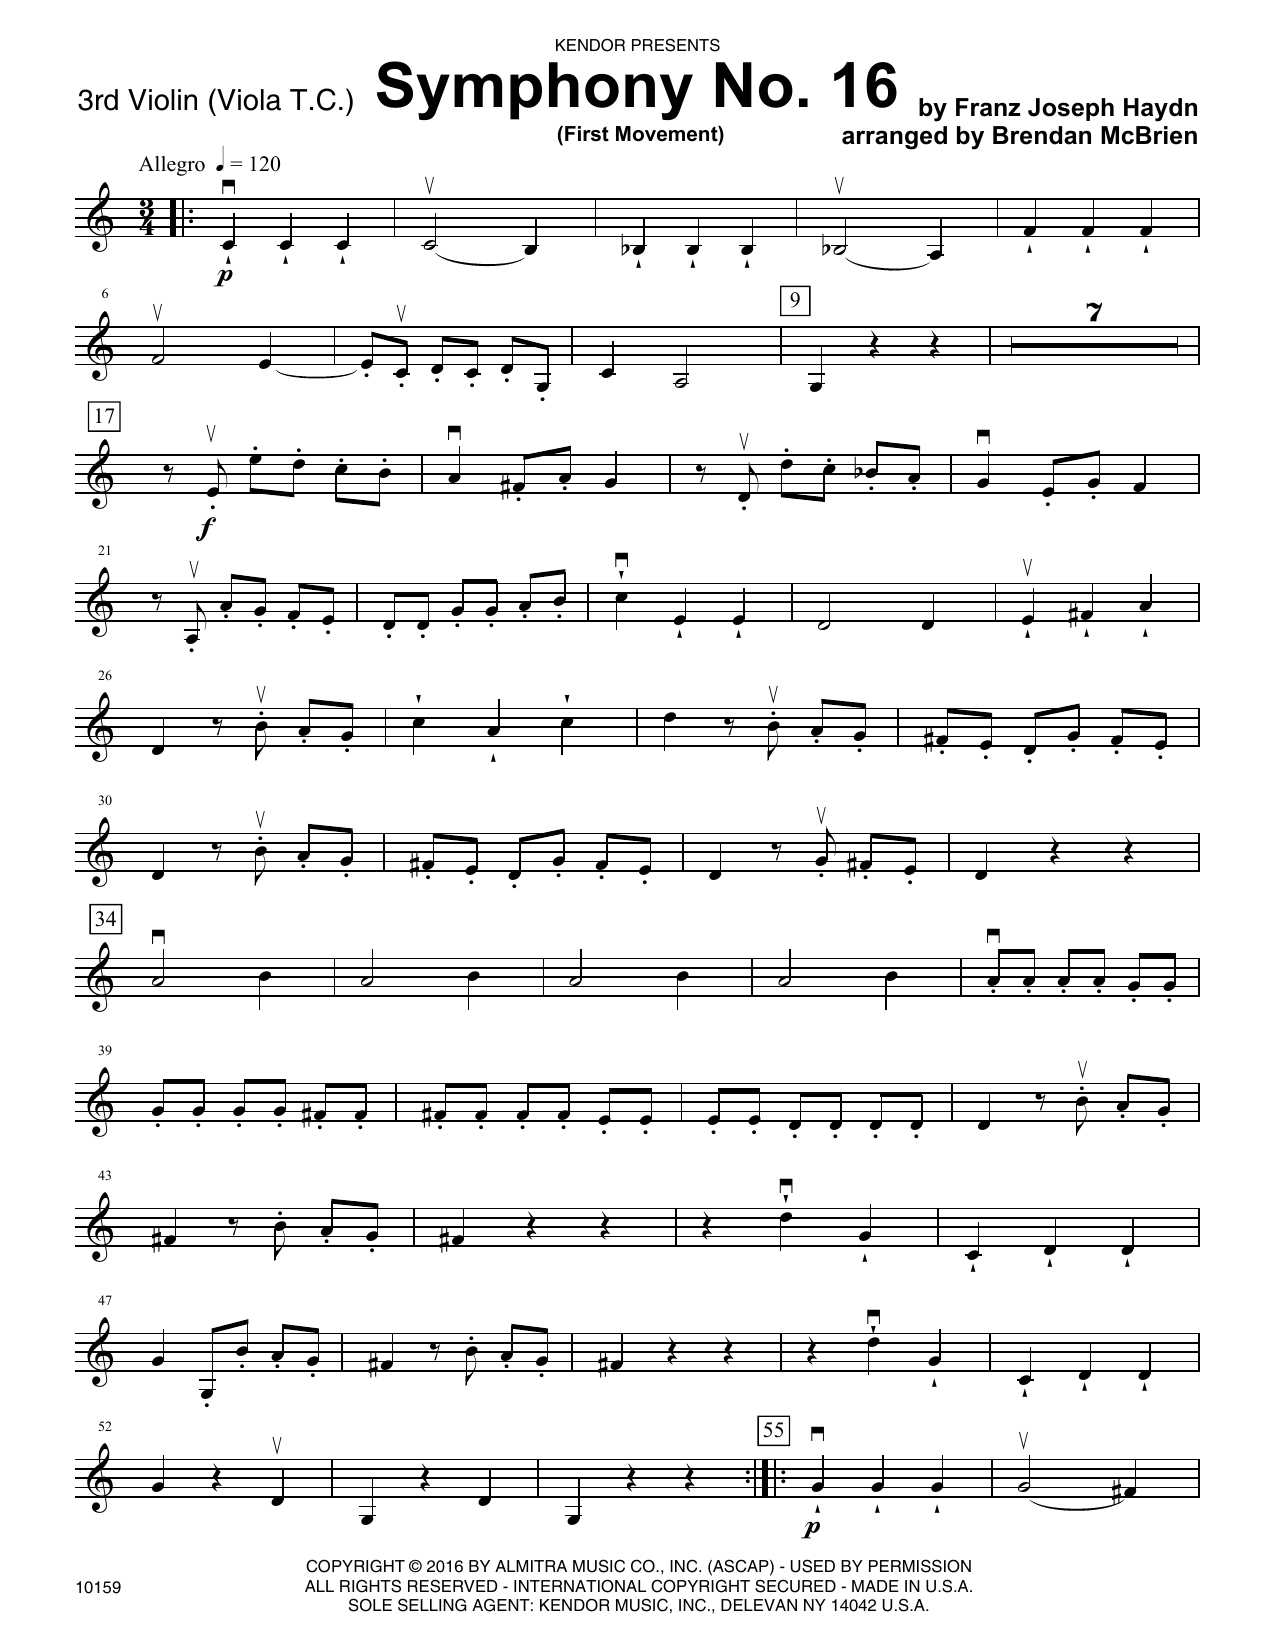 Download Brian McBrien Symphony No. 16 (First Movement) - Viol Sheet Music